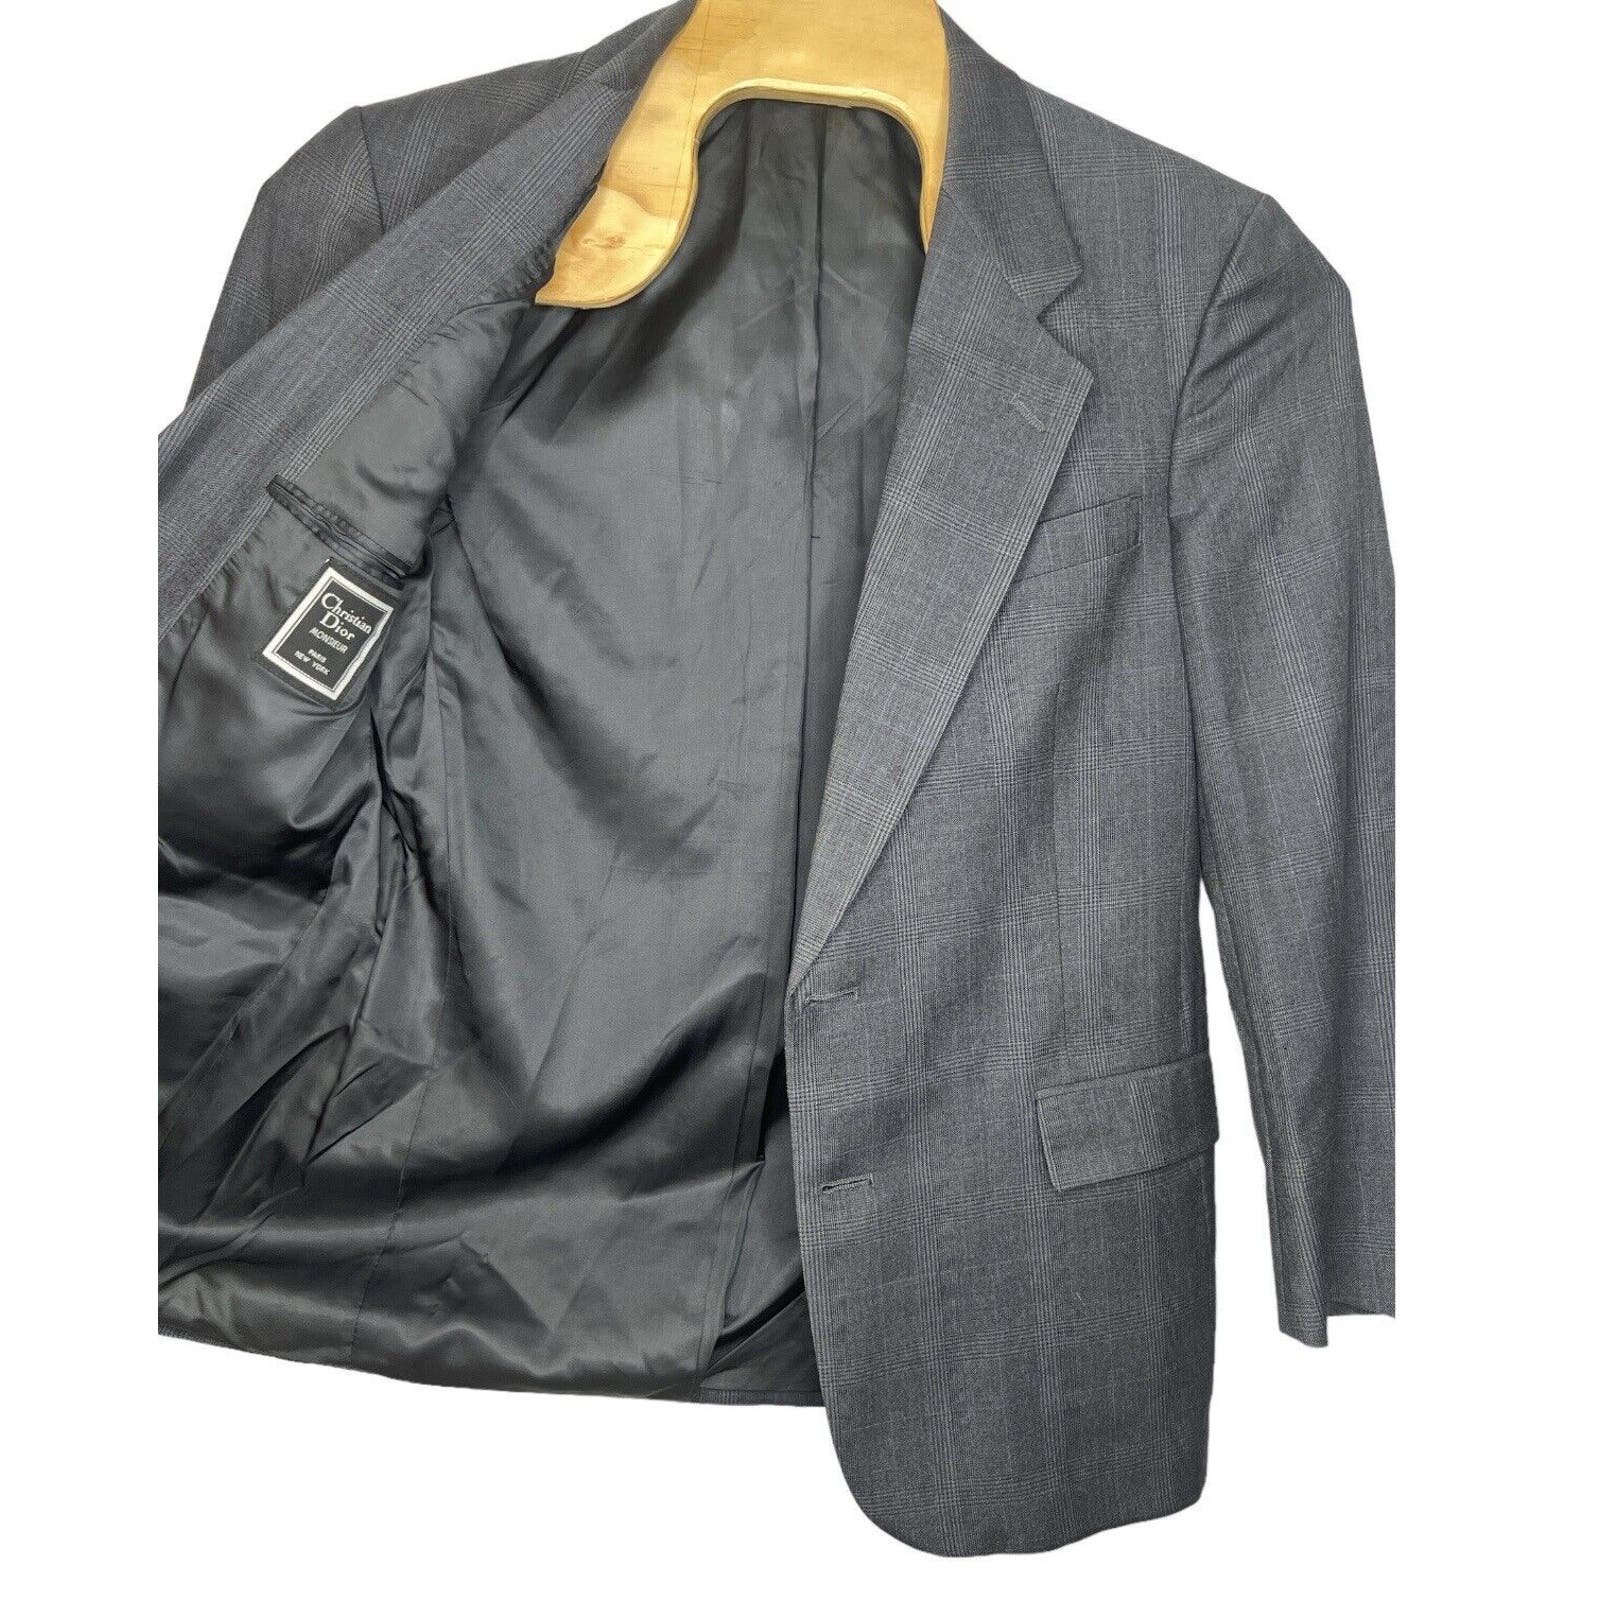 Christian Dior Men’s Monsieur 2 Button Wool Blazer Jacket Gray Blue Check 41R E3fddyY0o